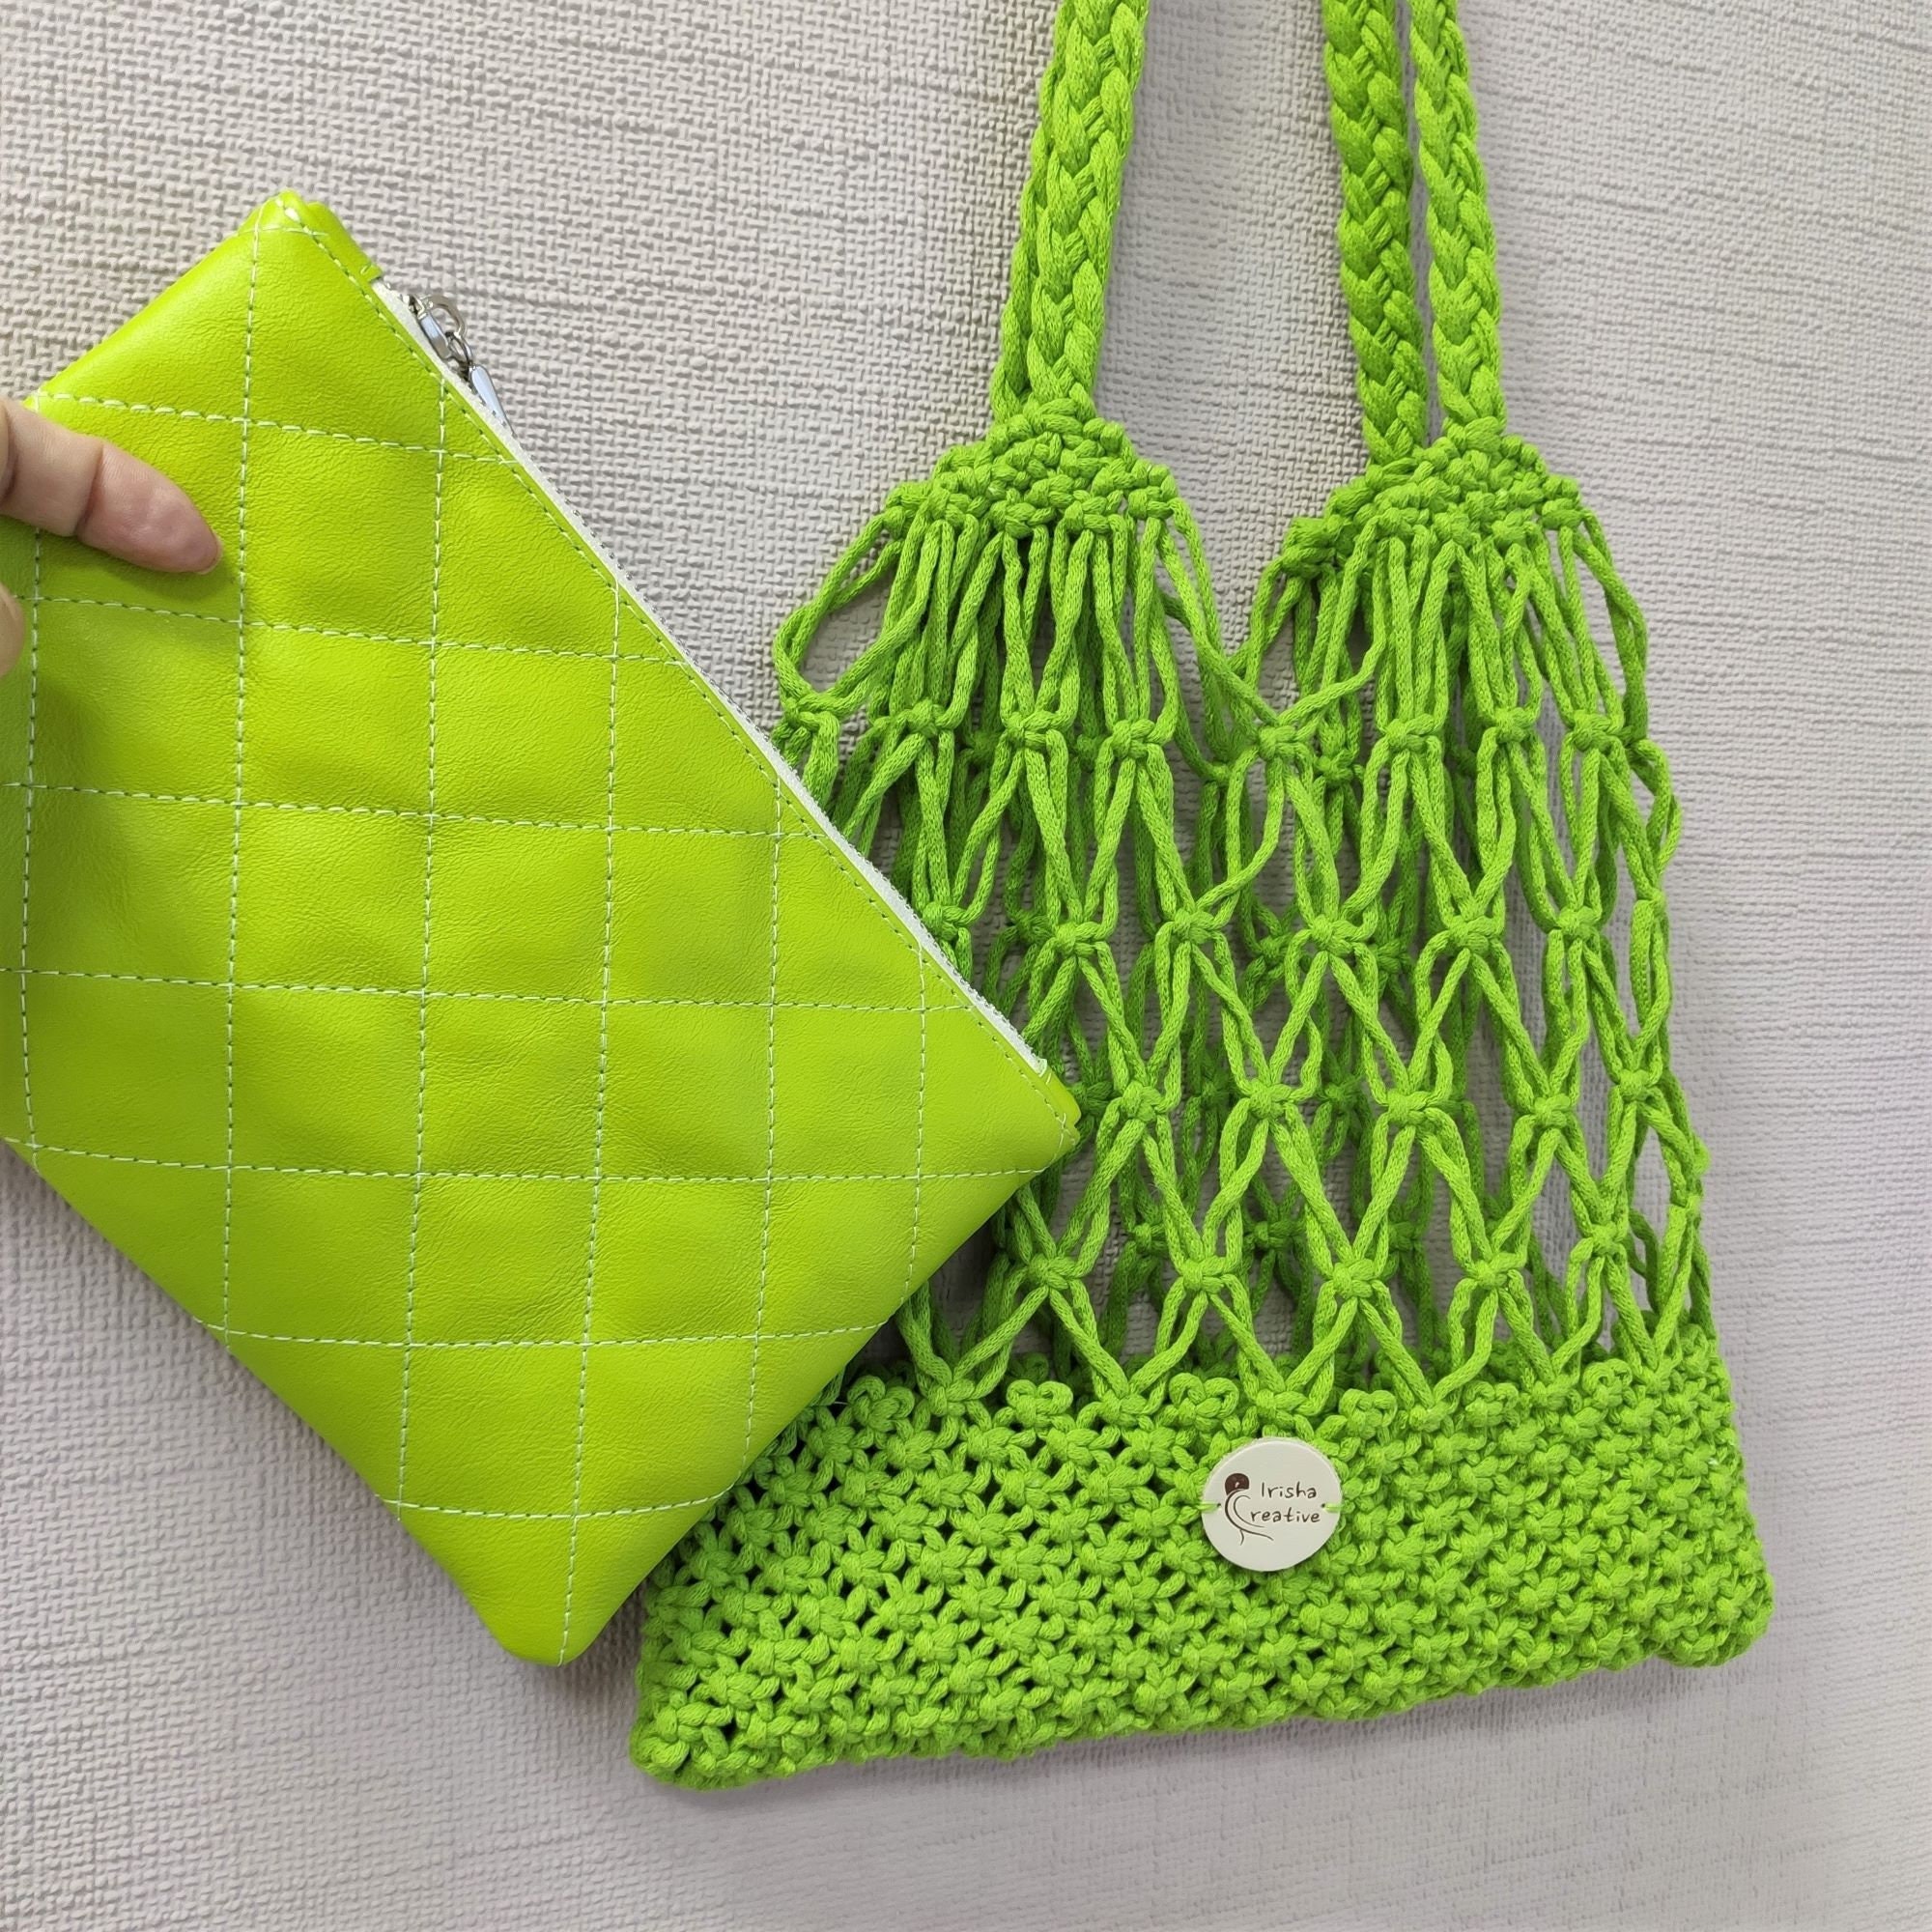 Macrame string bag Mesh bag with leather bag inside quilted | Etsy